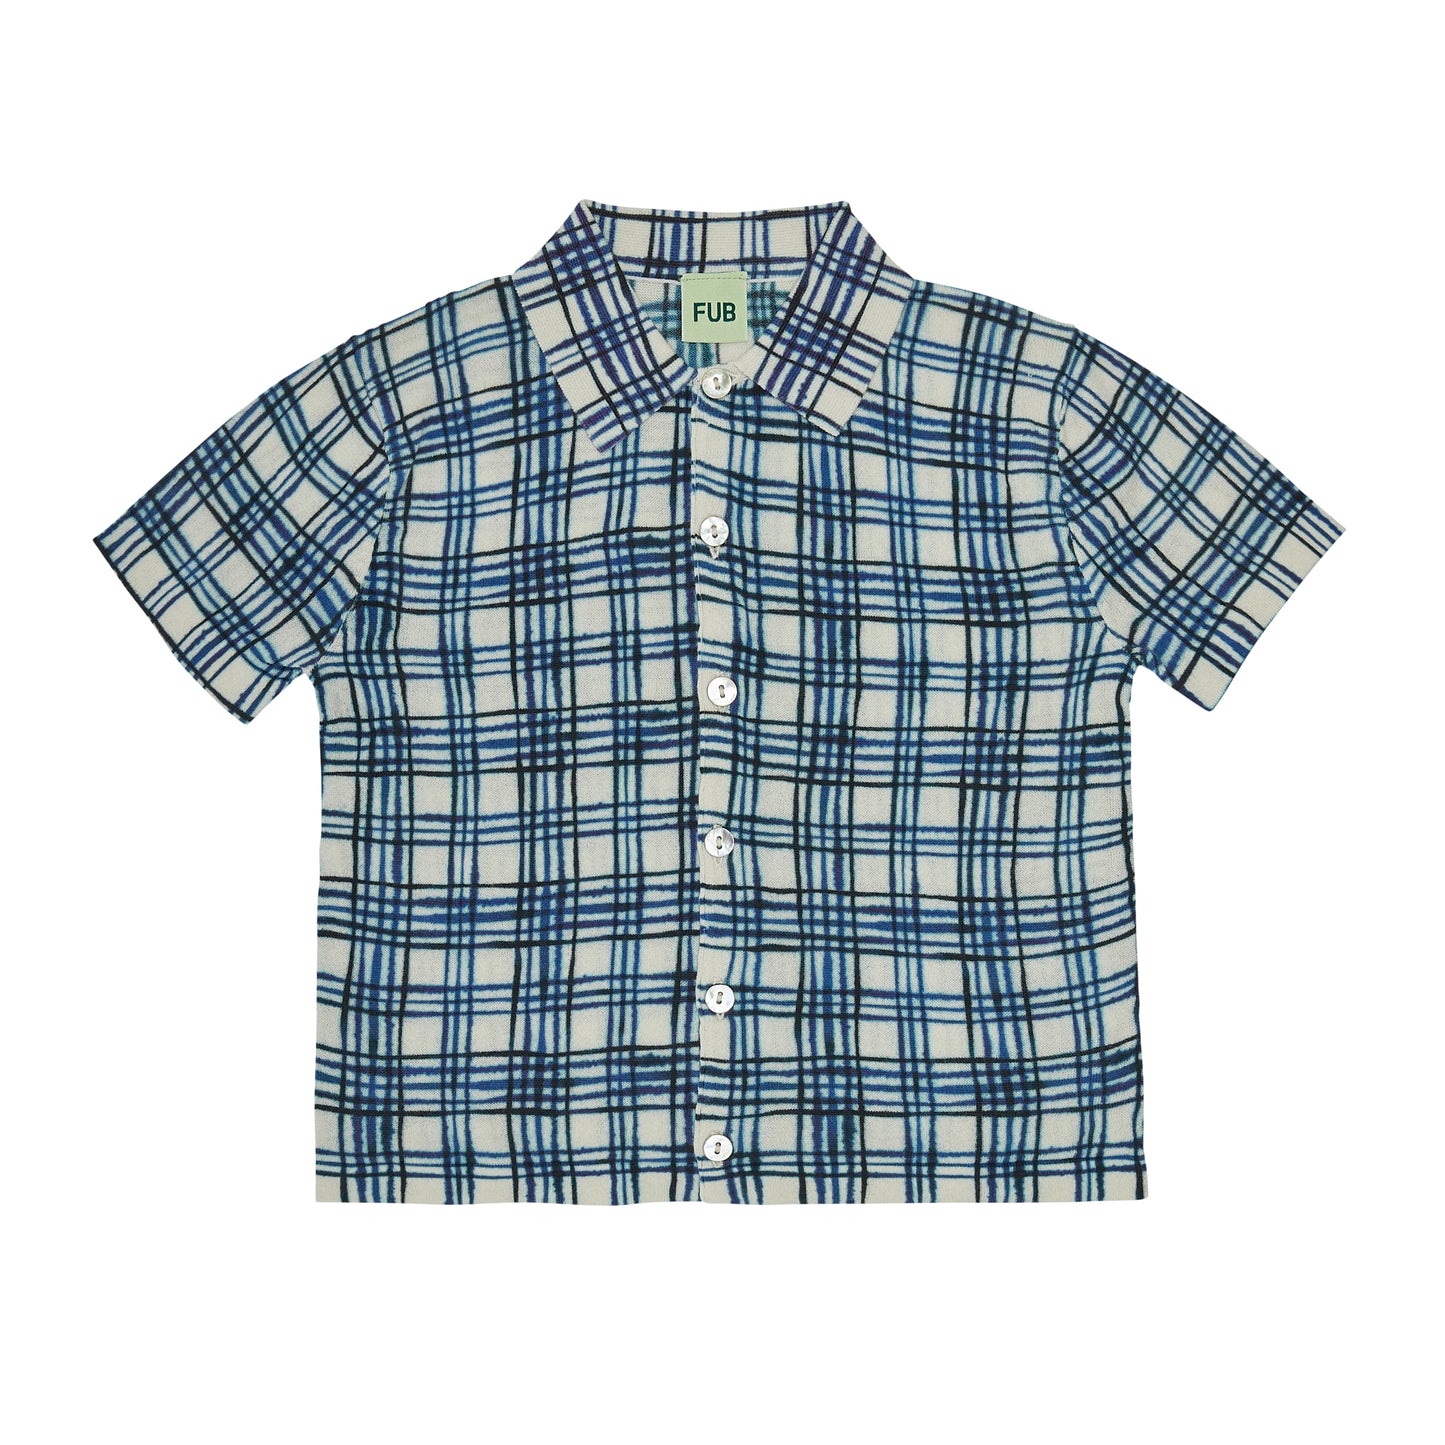 Organic Cotton Printed Short Sleeves Collar Shirt Ecru Khaki